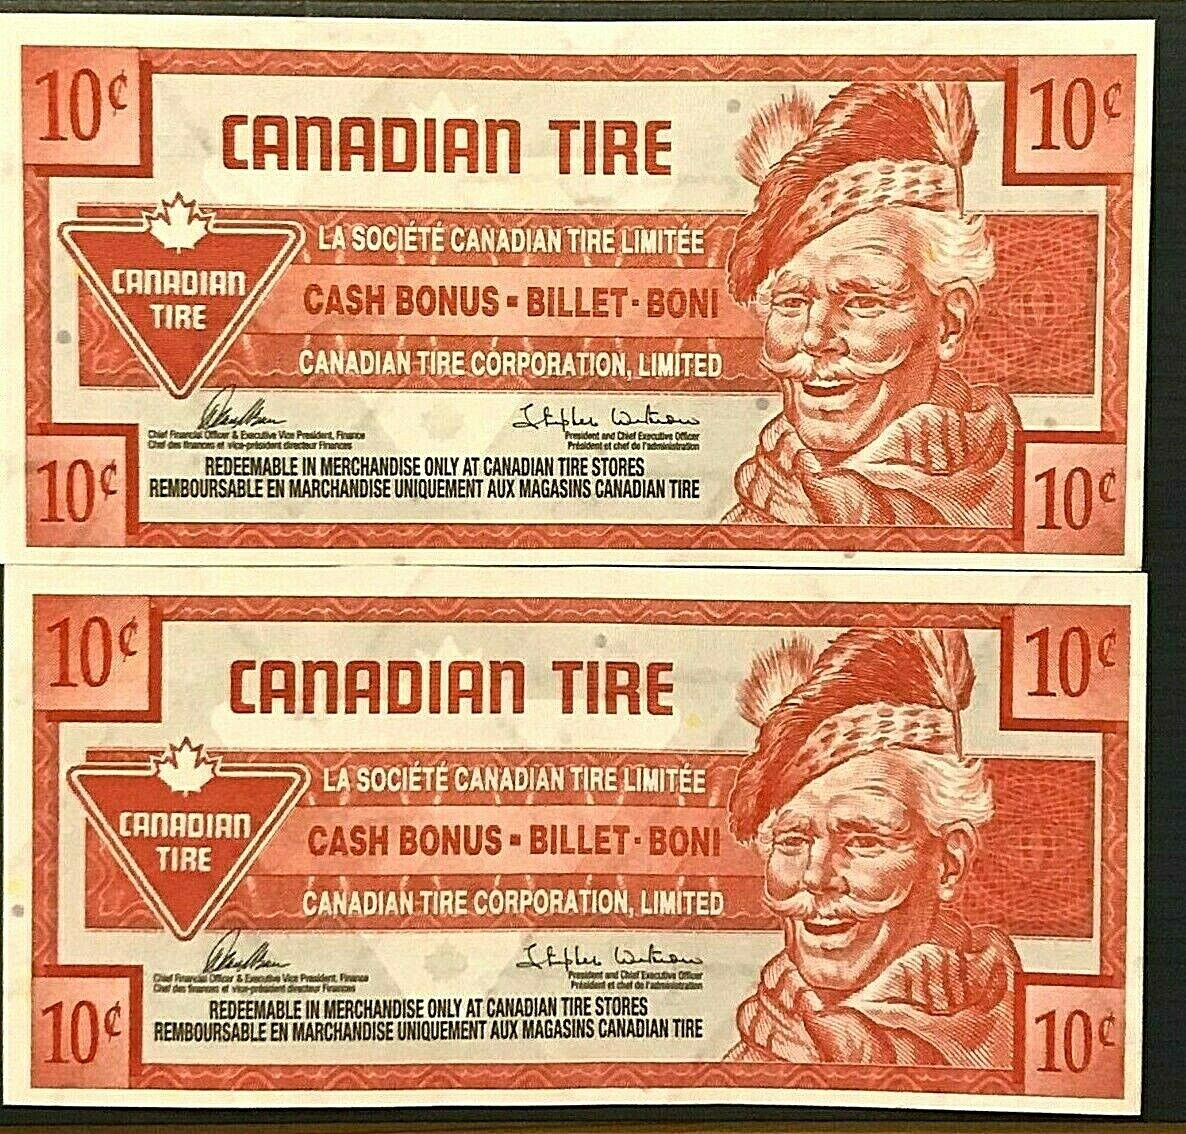 2017 10 Cent Canadian Tire Money - Consecutive Serial #'s - 0481049233 / 0481049 Без бренда - фотография #2